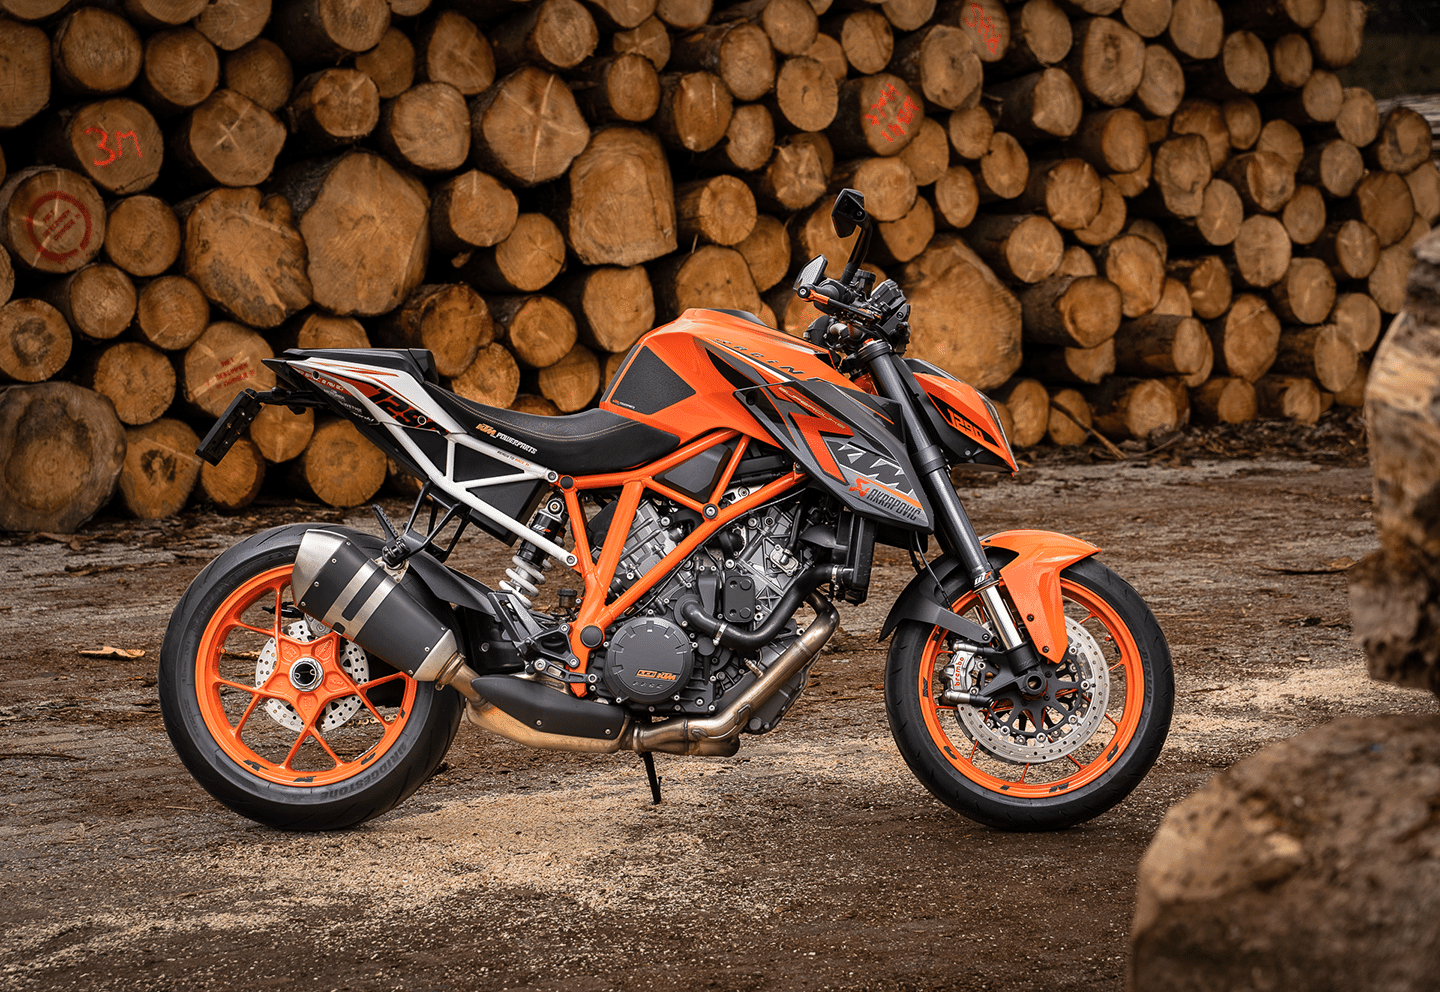 Motor foto Motorcycle orange KTM with wood in background